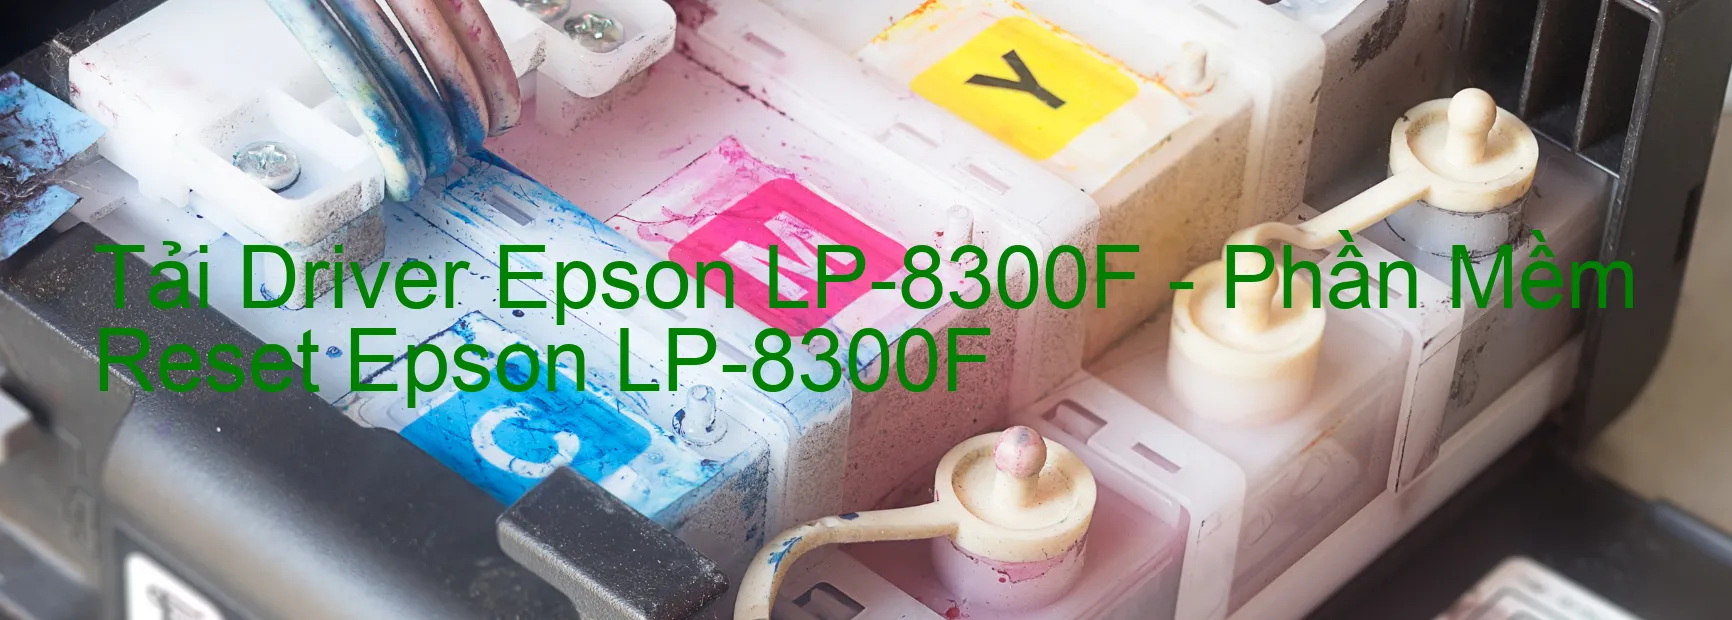 Driver Epson LP-8300F, Phần Mềm Reset Epson LP-8300F